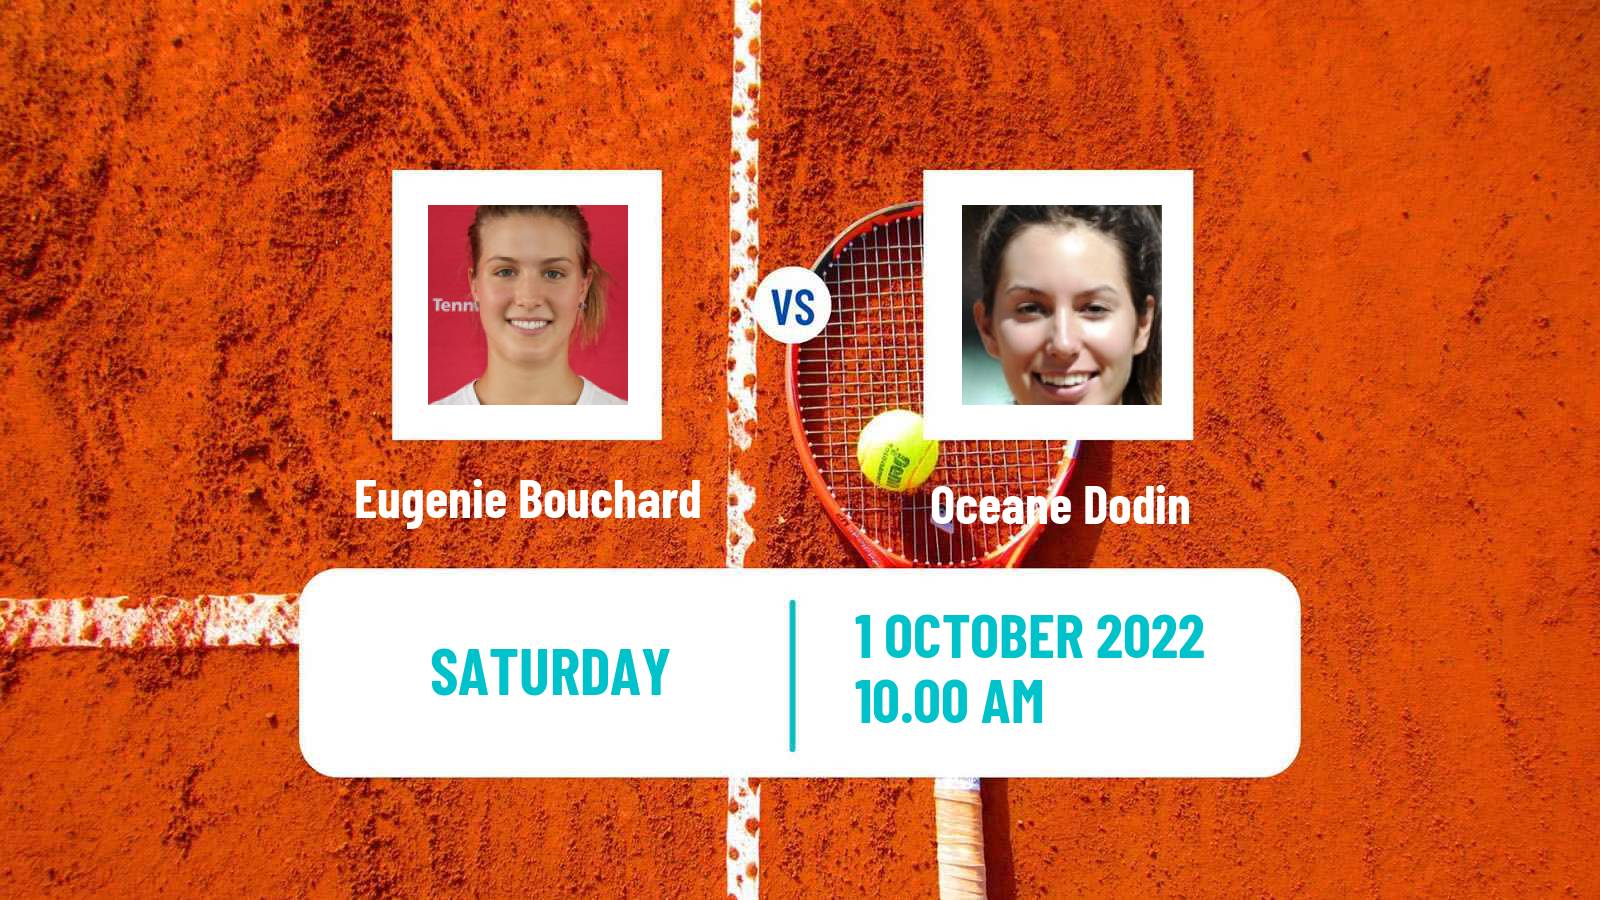 Tennis WTA Ostrava Eugenie Bouchard - Oceane Dodin